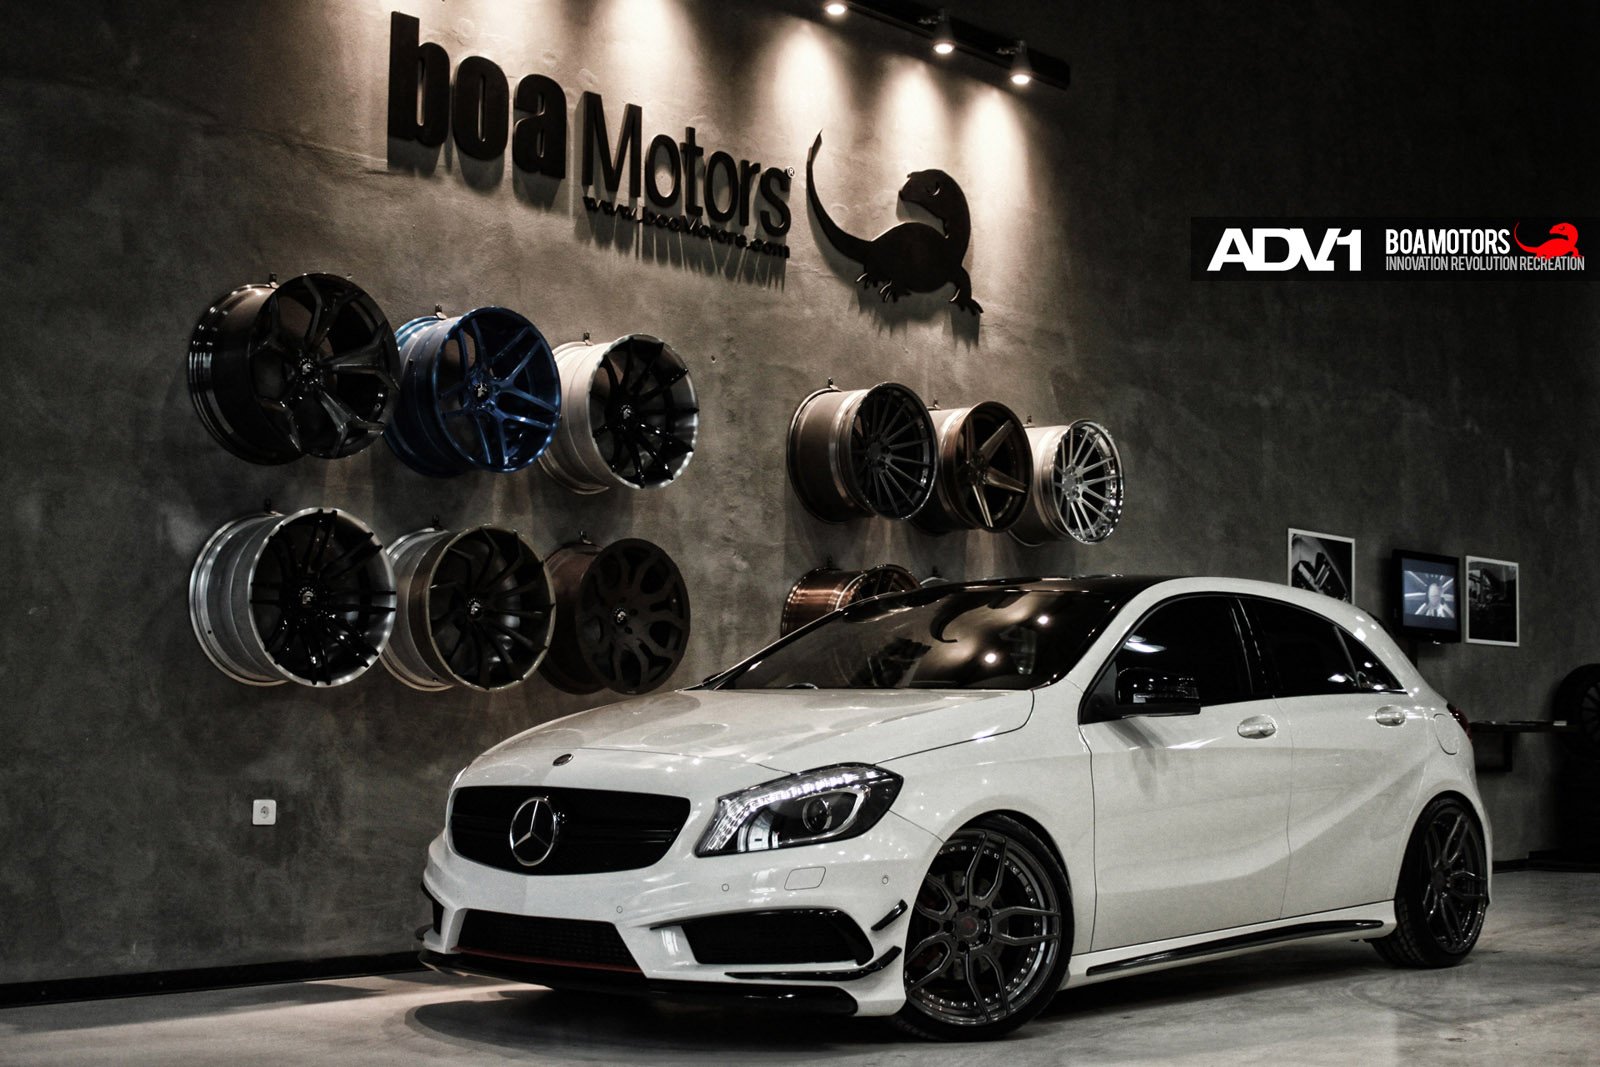 2015, Adv1, Wheels, Tuning, Cars, Mercedes, A200 Wallpaper